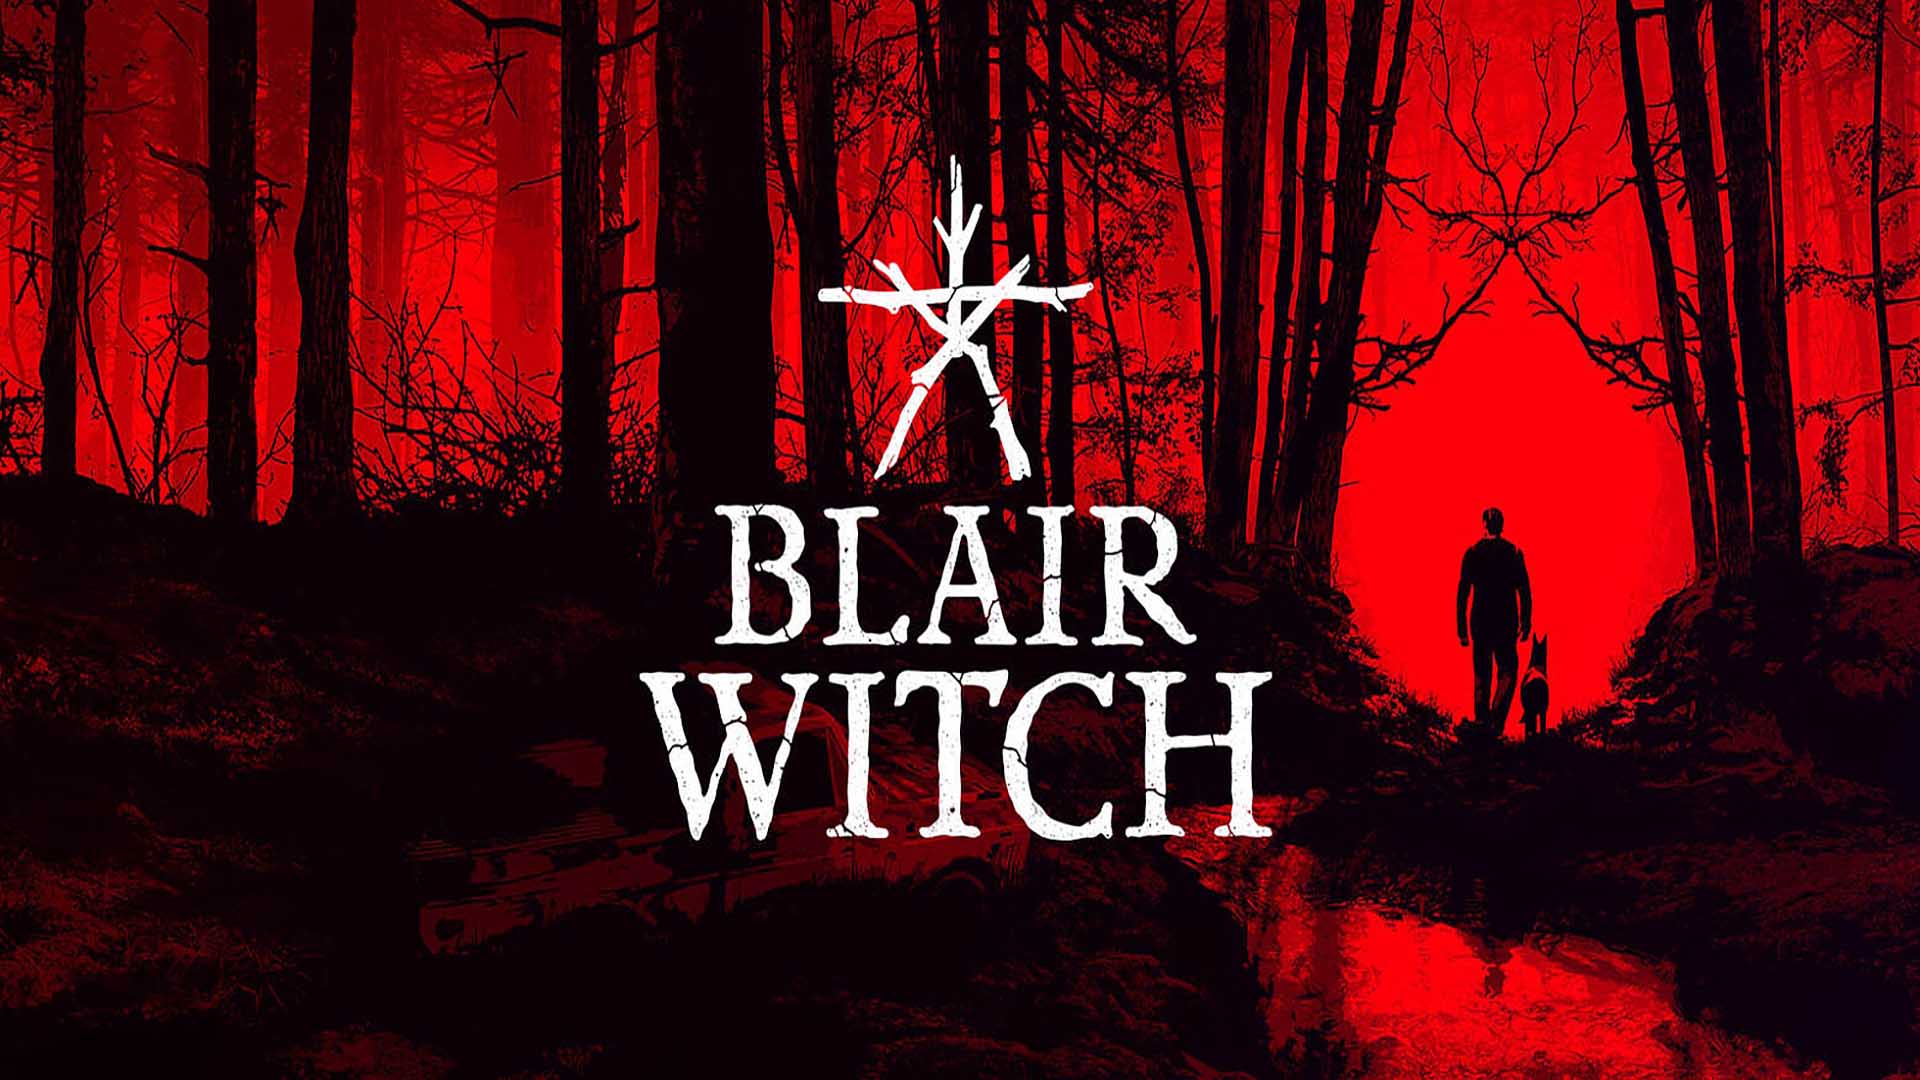 Blair witch game walkthrough